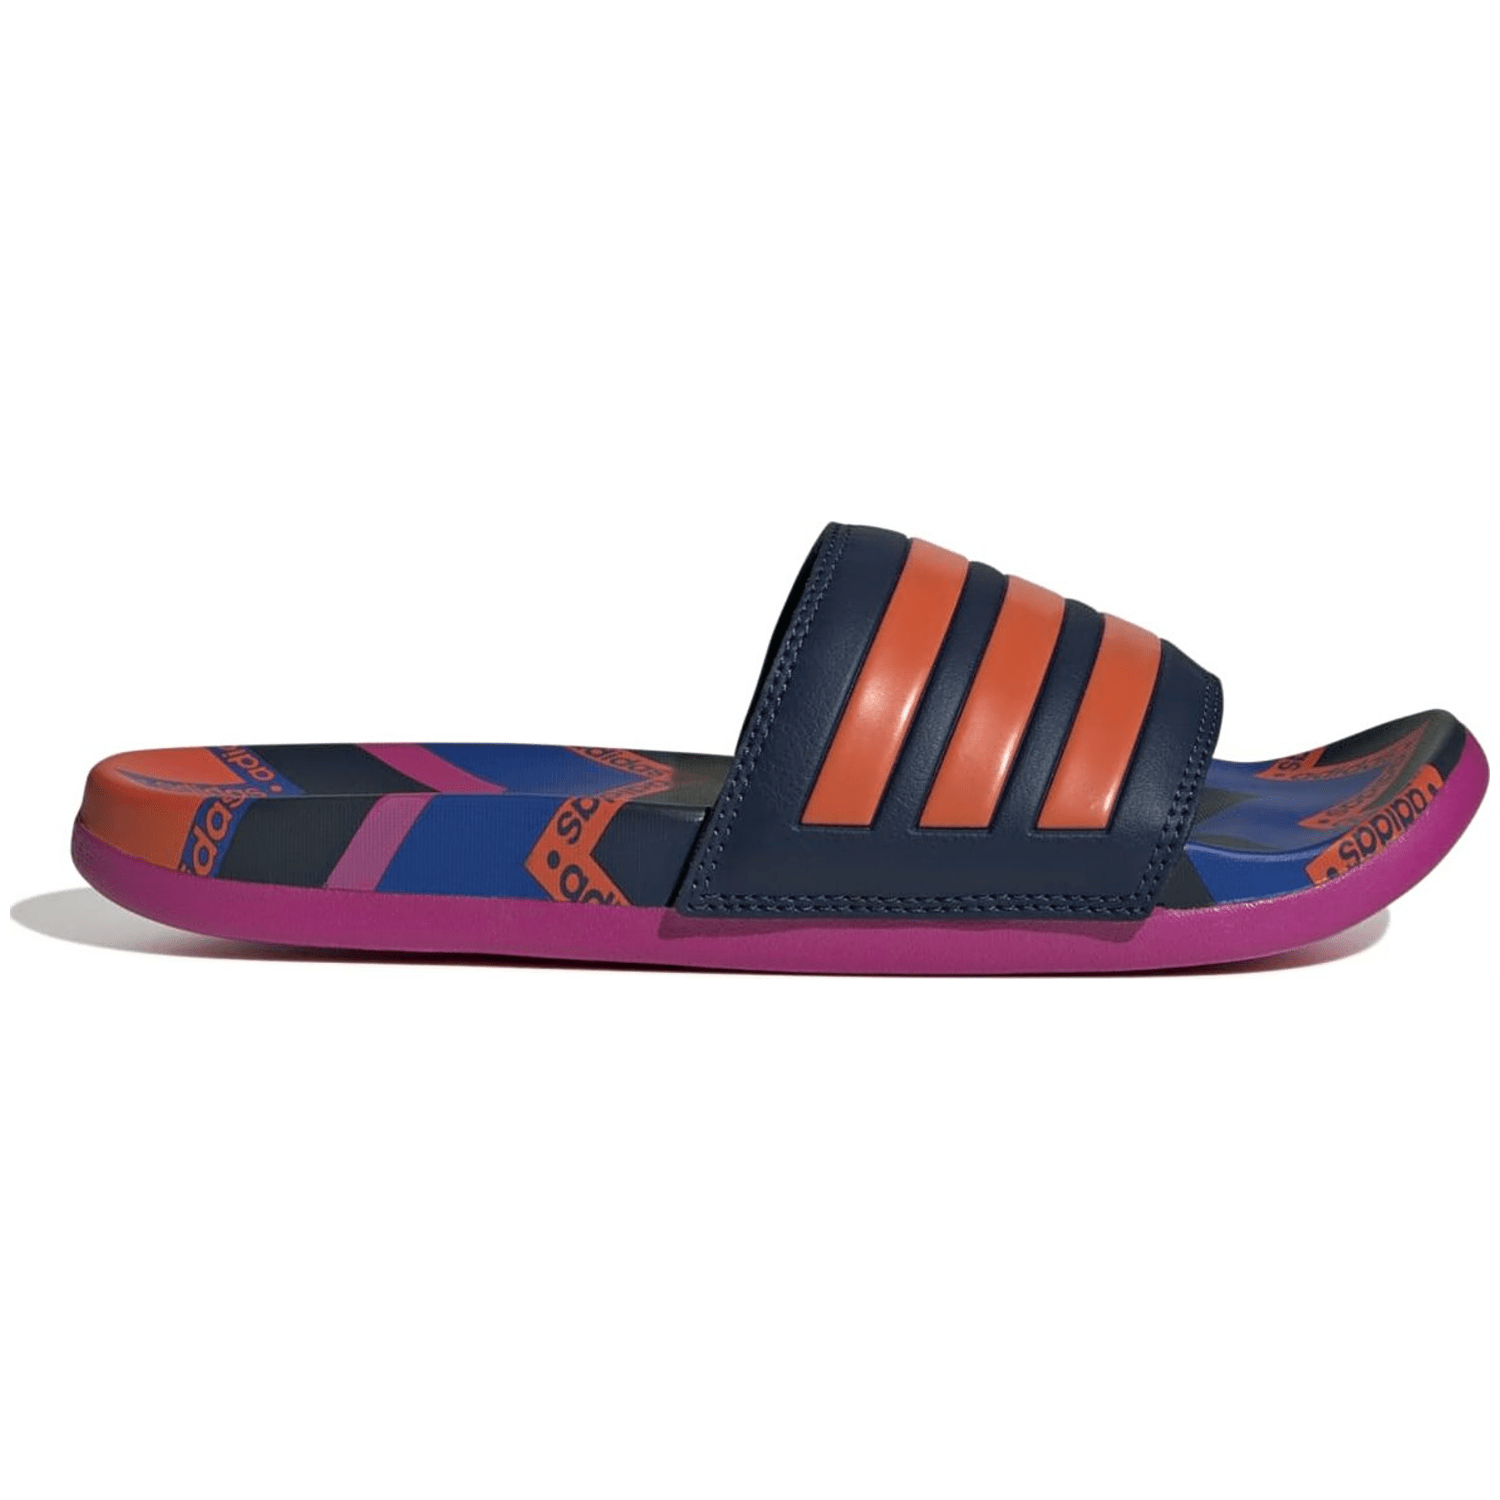 Adidas adilette Comfort Sandale Damen